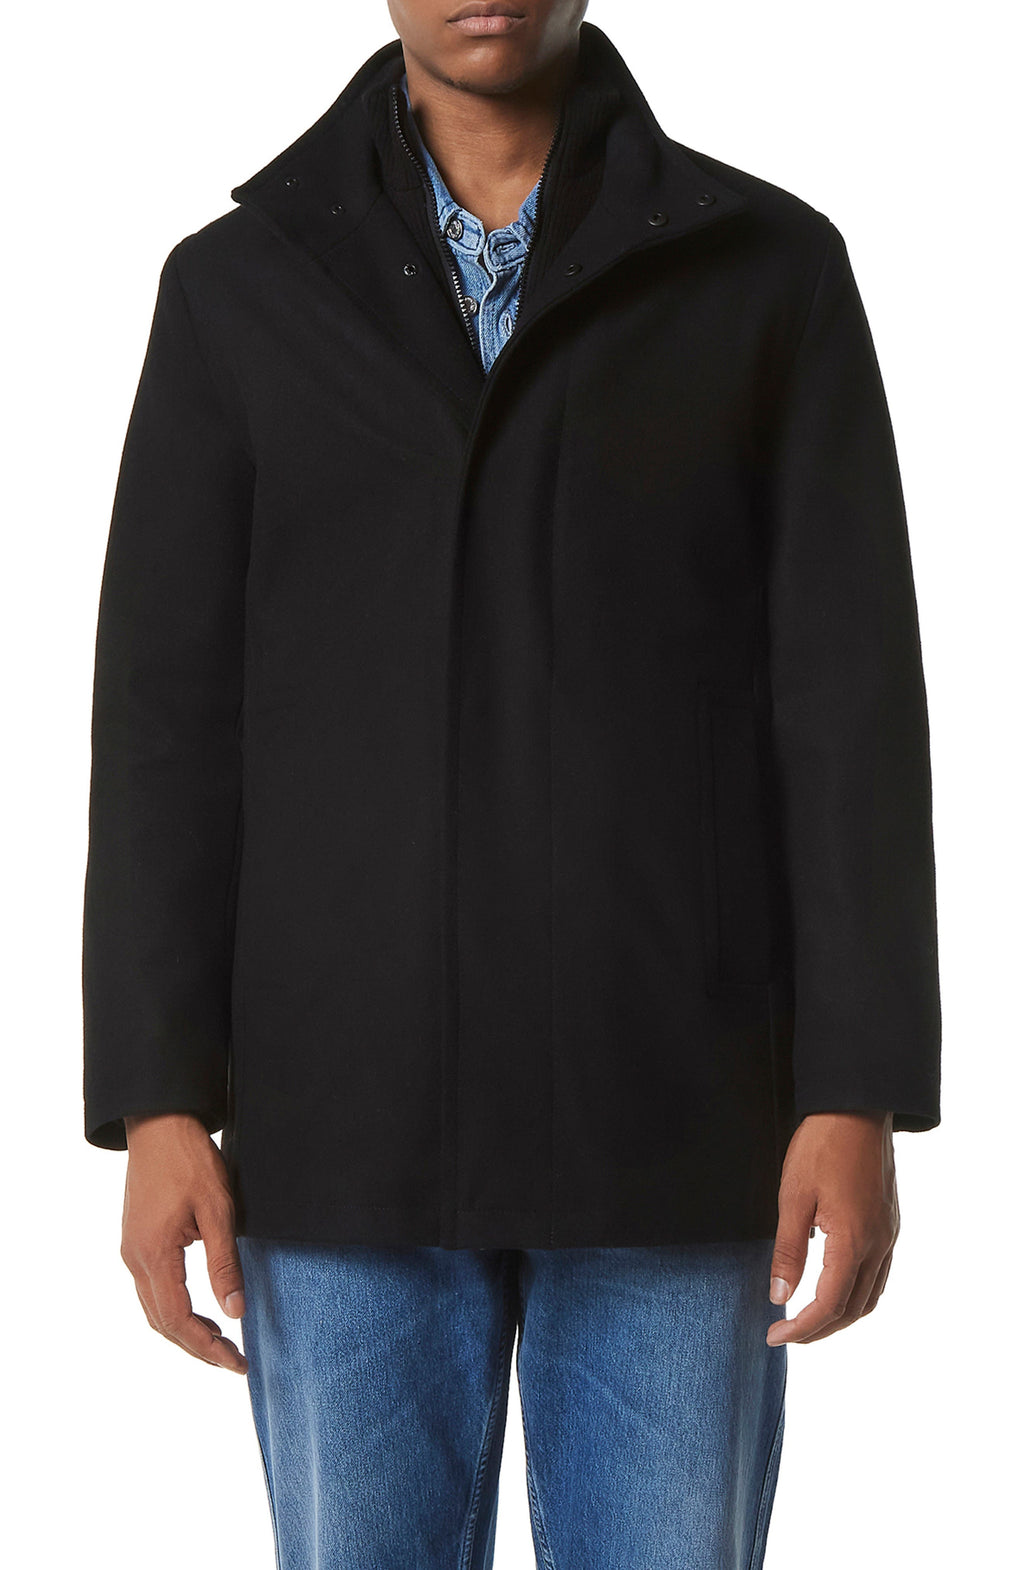 ANDREW MARC Coyle Wool Blend Bib Coat, Main, color, BLACK